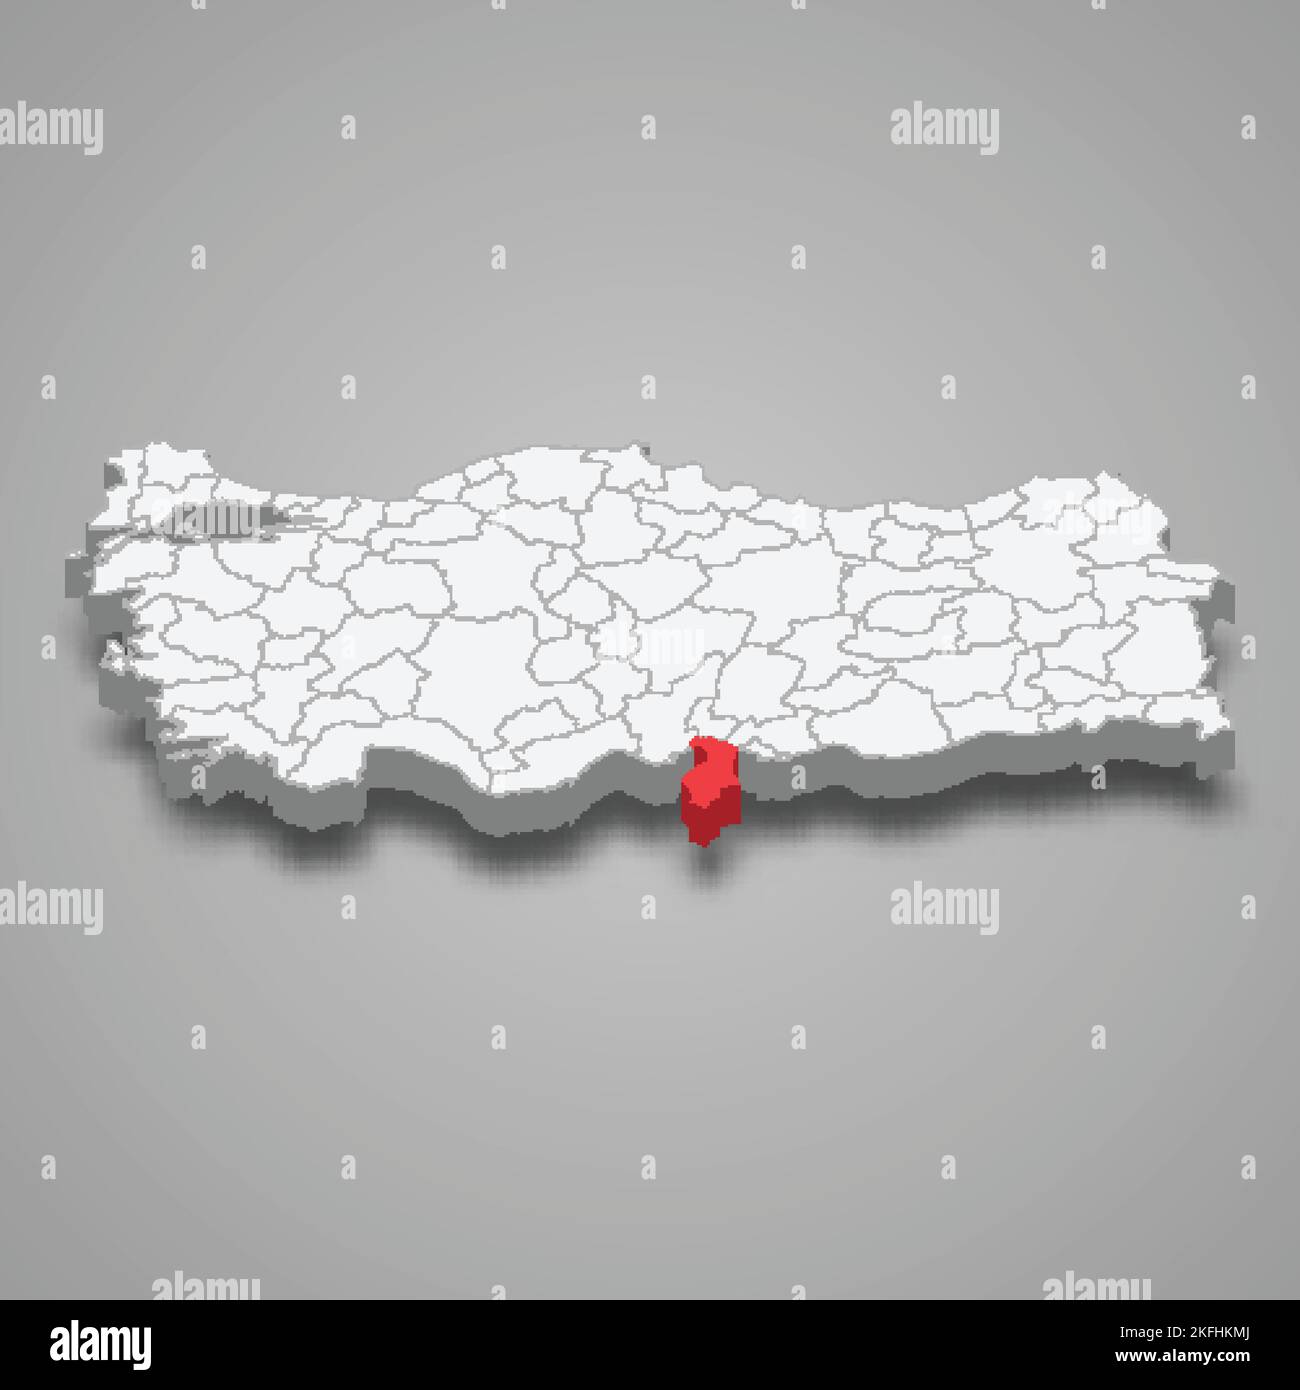 Hatay region location within Turkey 3d isometric map Stock Vector